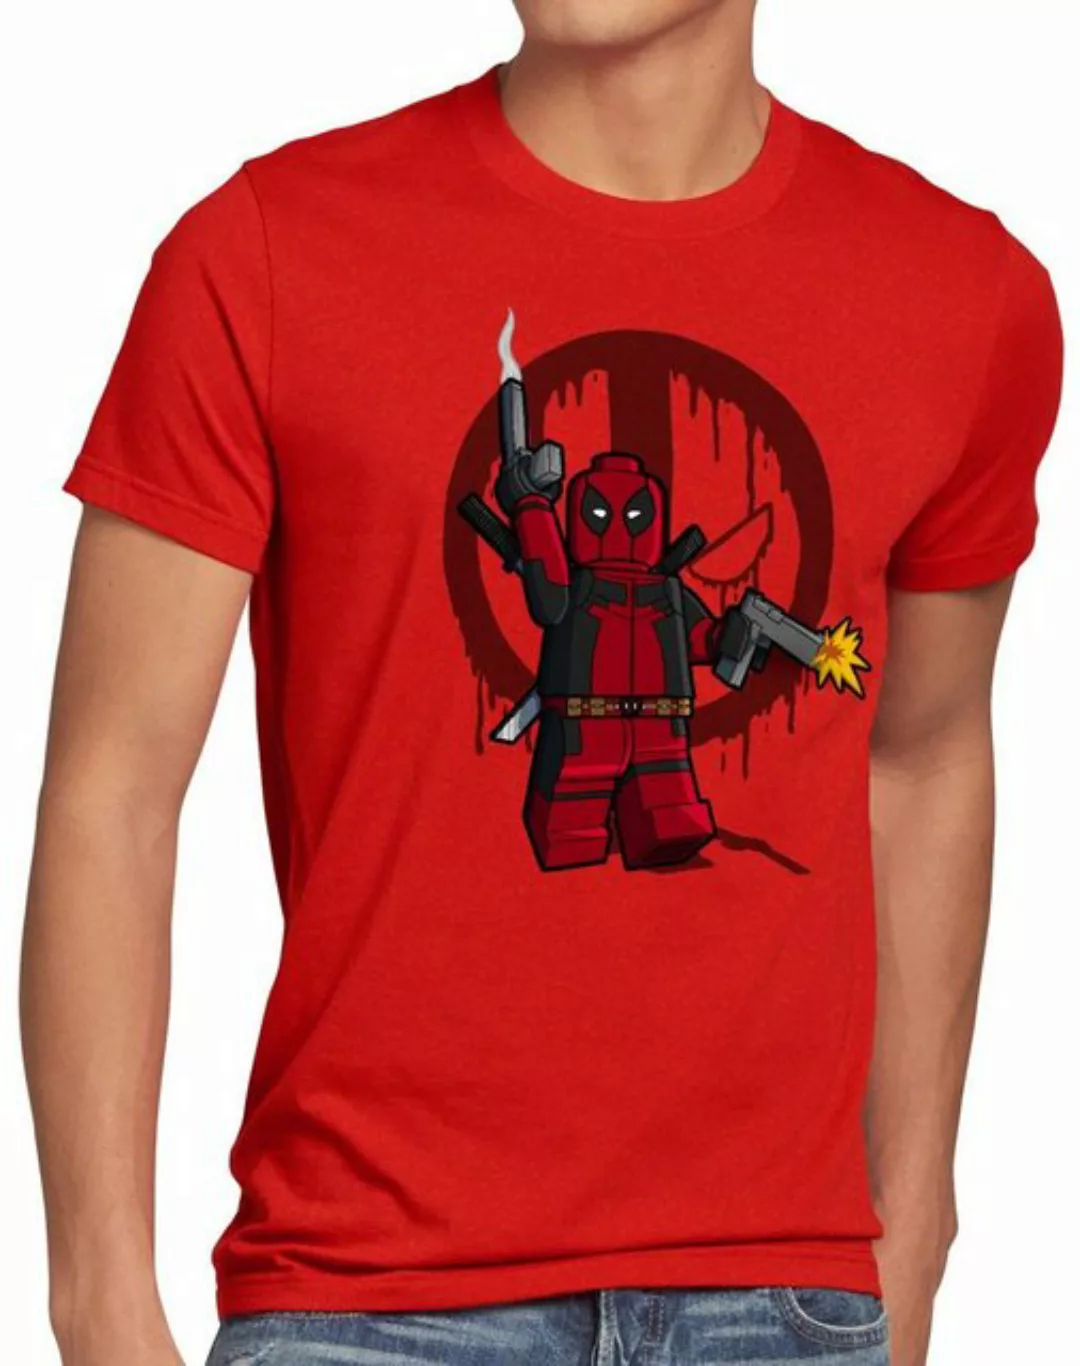 style3 Print-Shirt Herren T-Shirt Brick Mercenary comic baustein günstig online kaufen